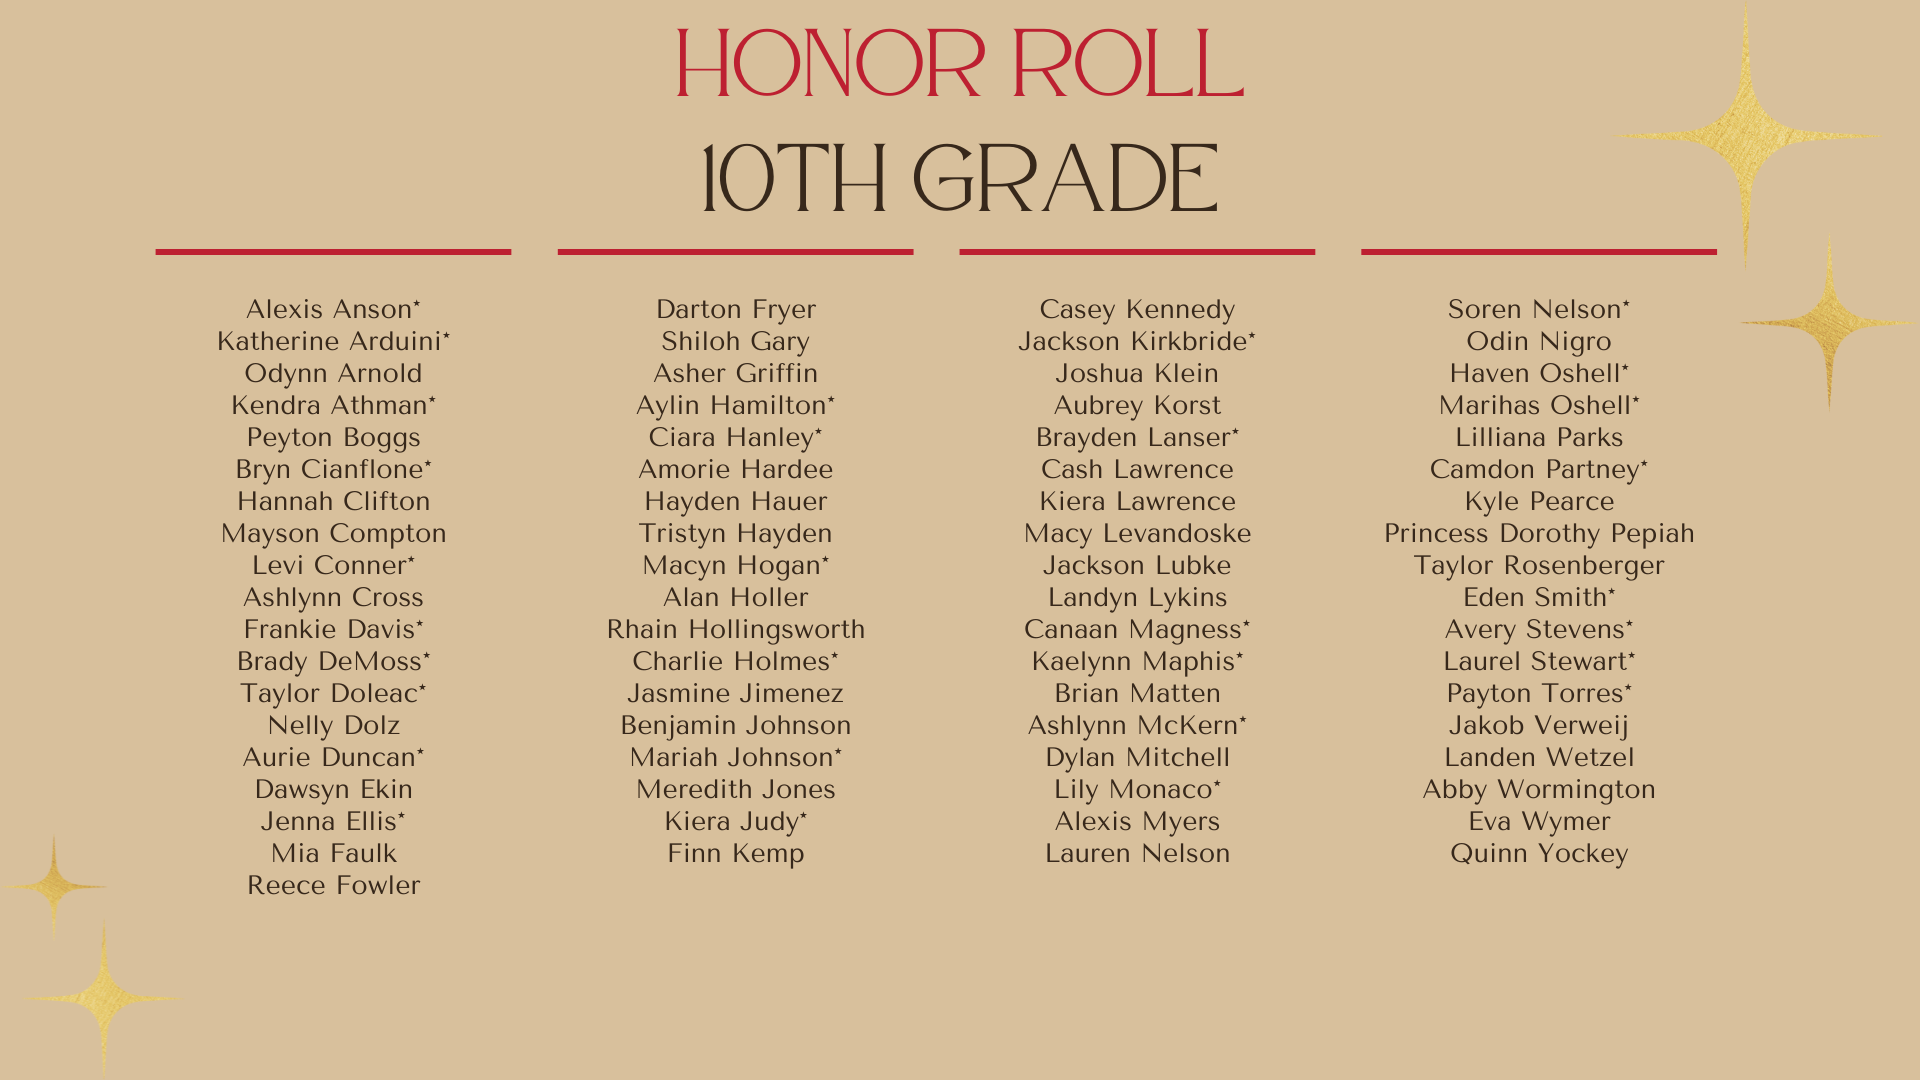 Honor Roll 10th grade